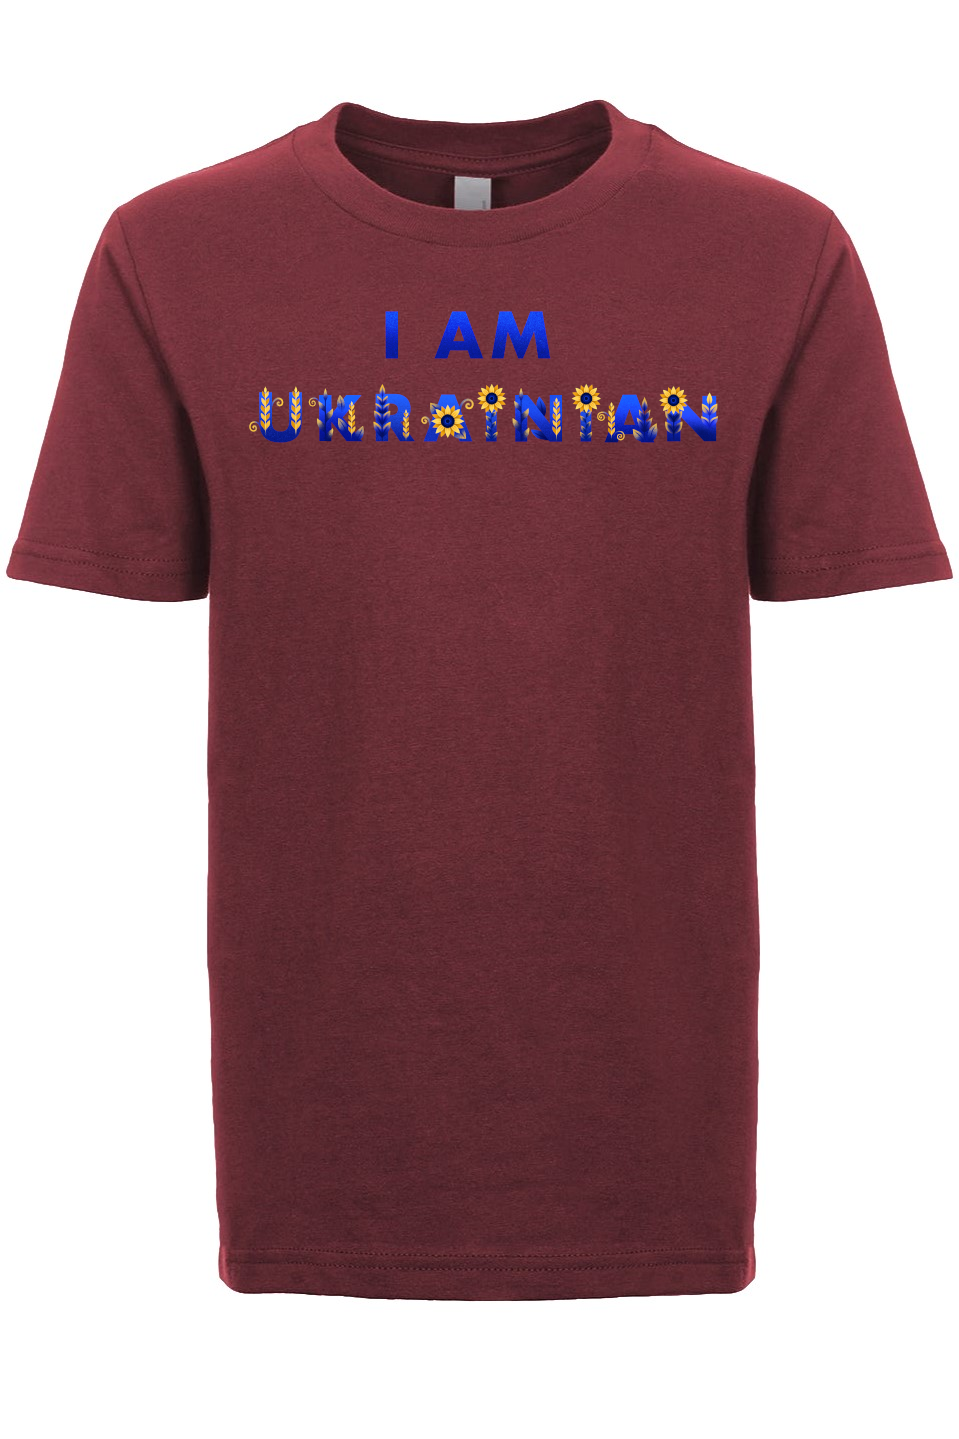 Kid's t-shirt "I AM UKRAINIAN"